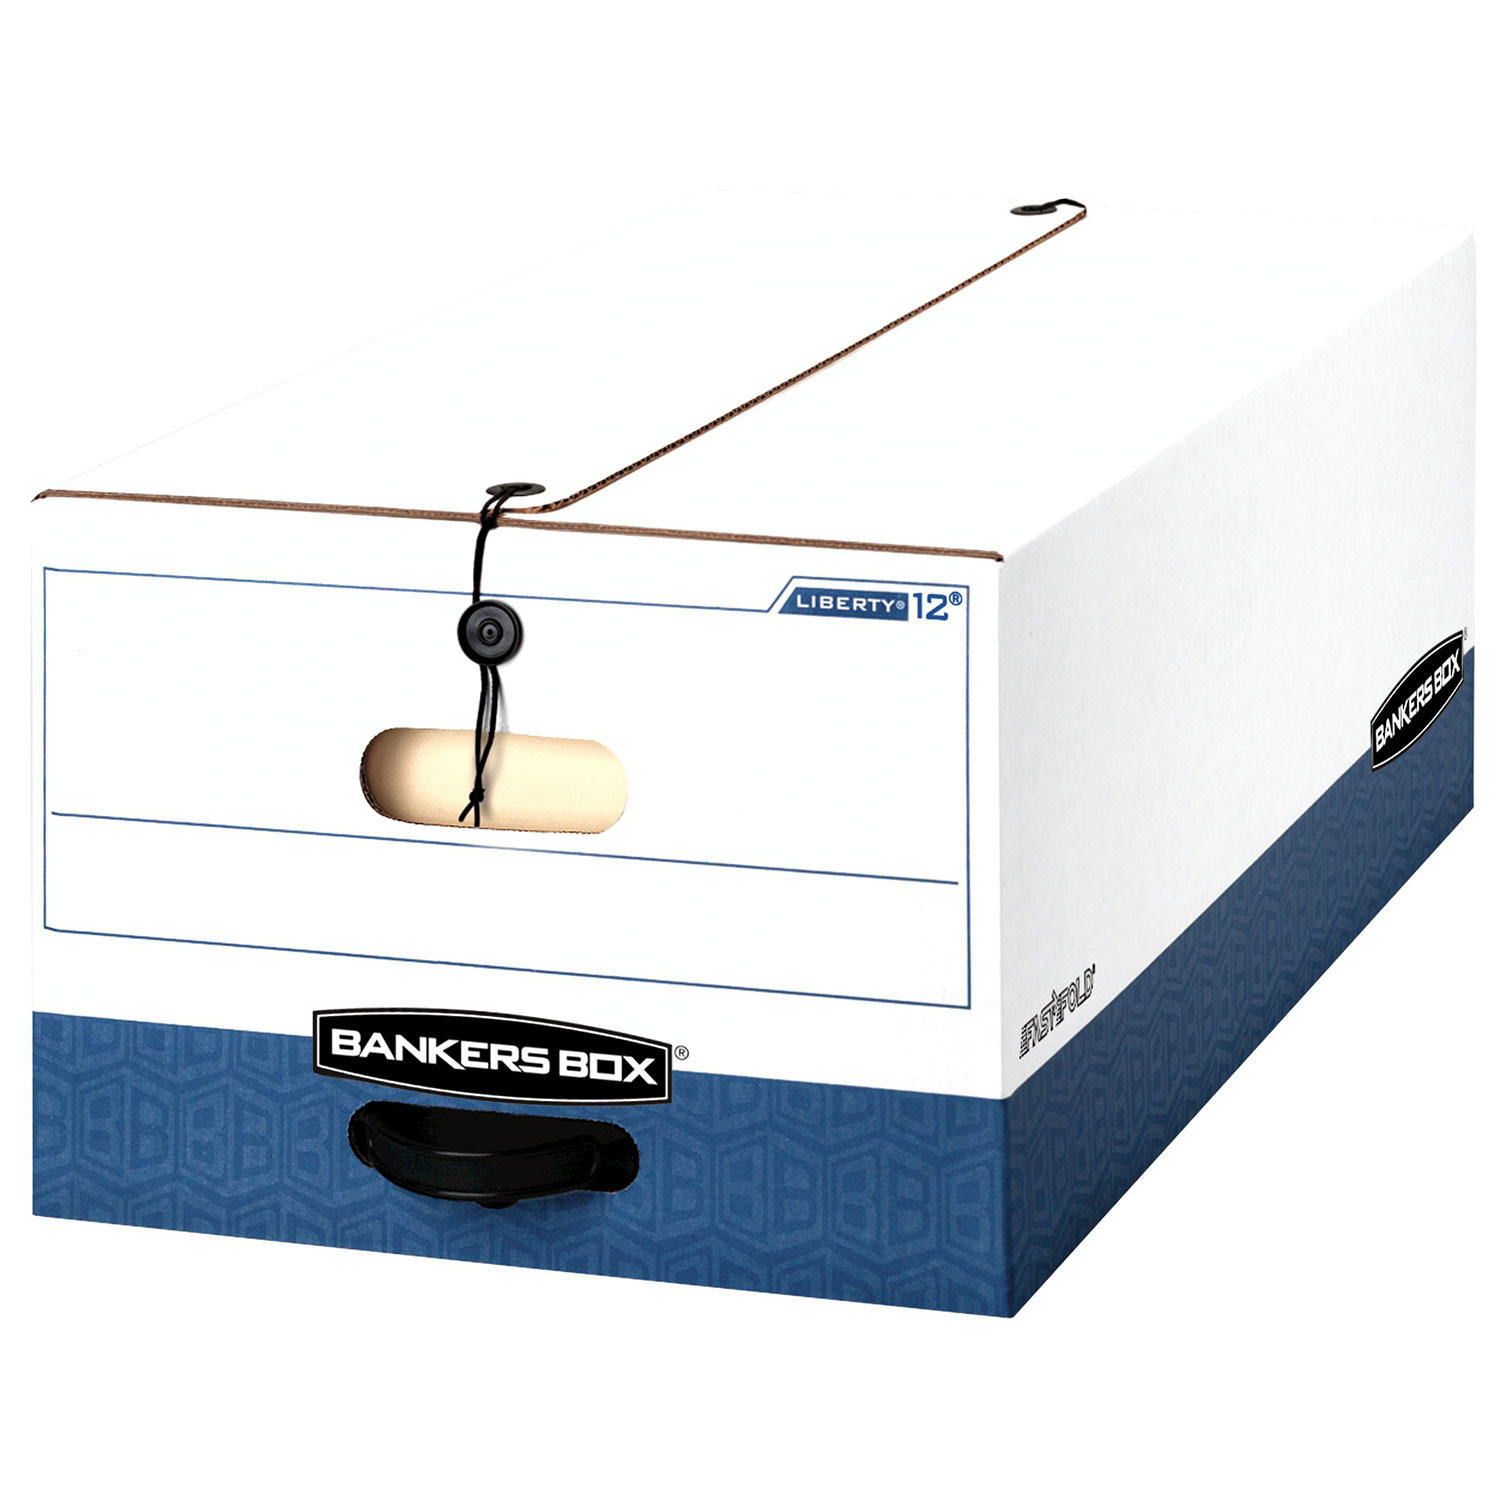 Bankers Box® Liberty Max Strength Storage Box - Legal - 12 ct.